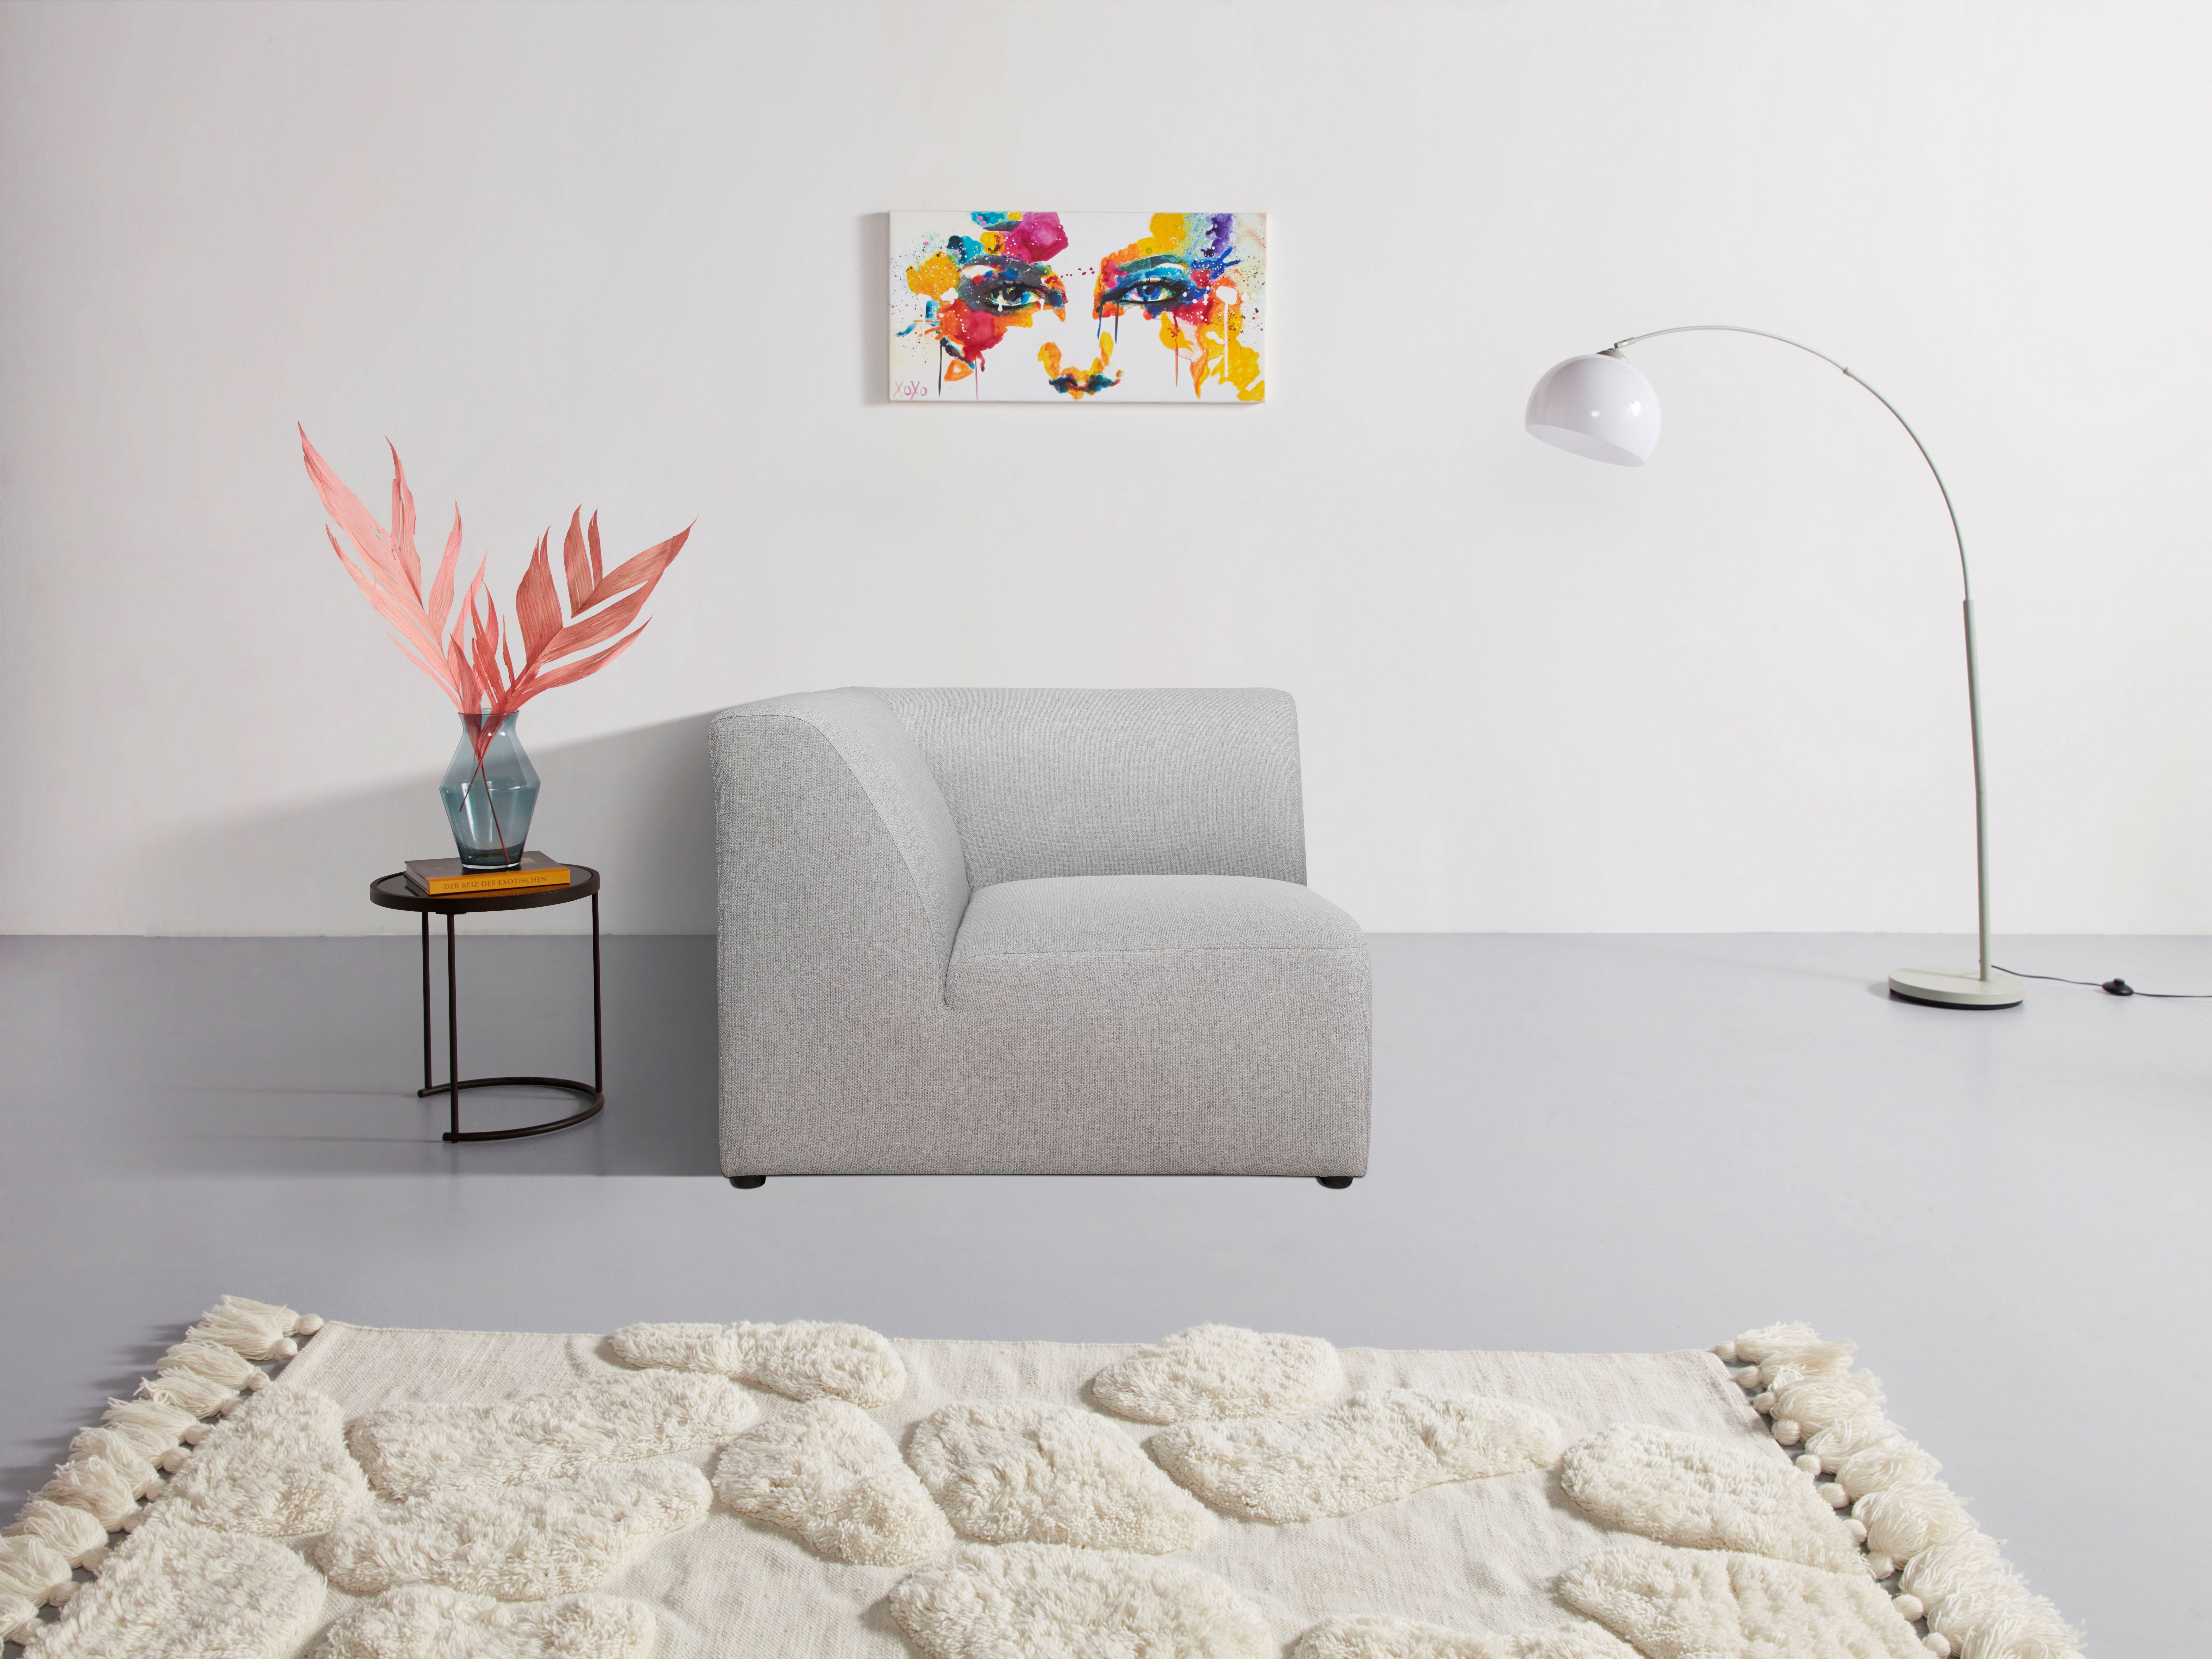 Koa, INOSIGN angenehmer Proportionen Komfort, beige schöne Sofa-Eckelement